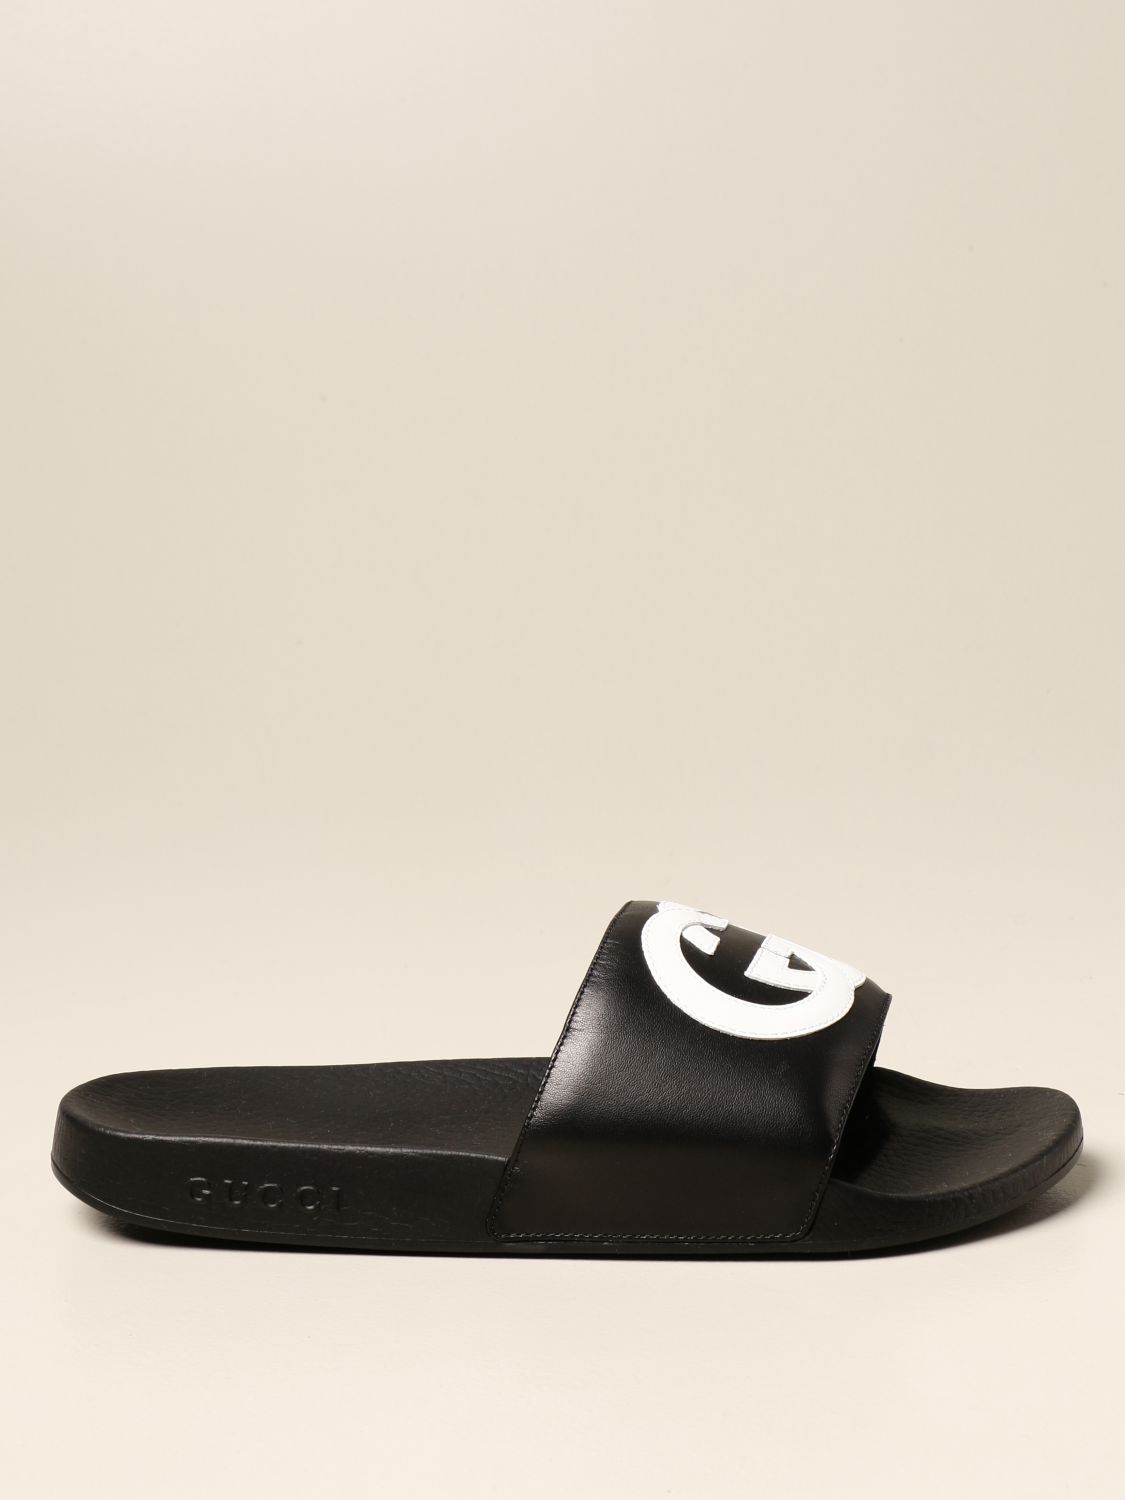 GUCCI: Slider sandal with GG logo - Black | Gucci sandals 644756 0R0F0 ...